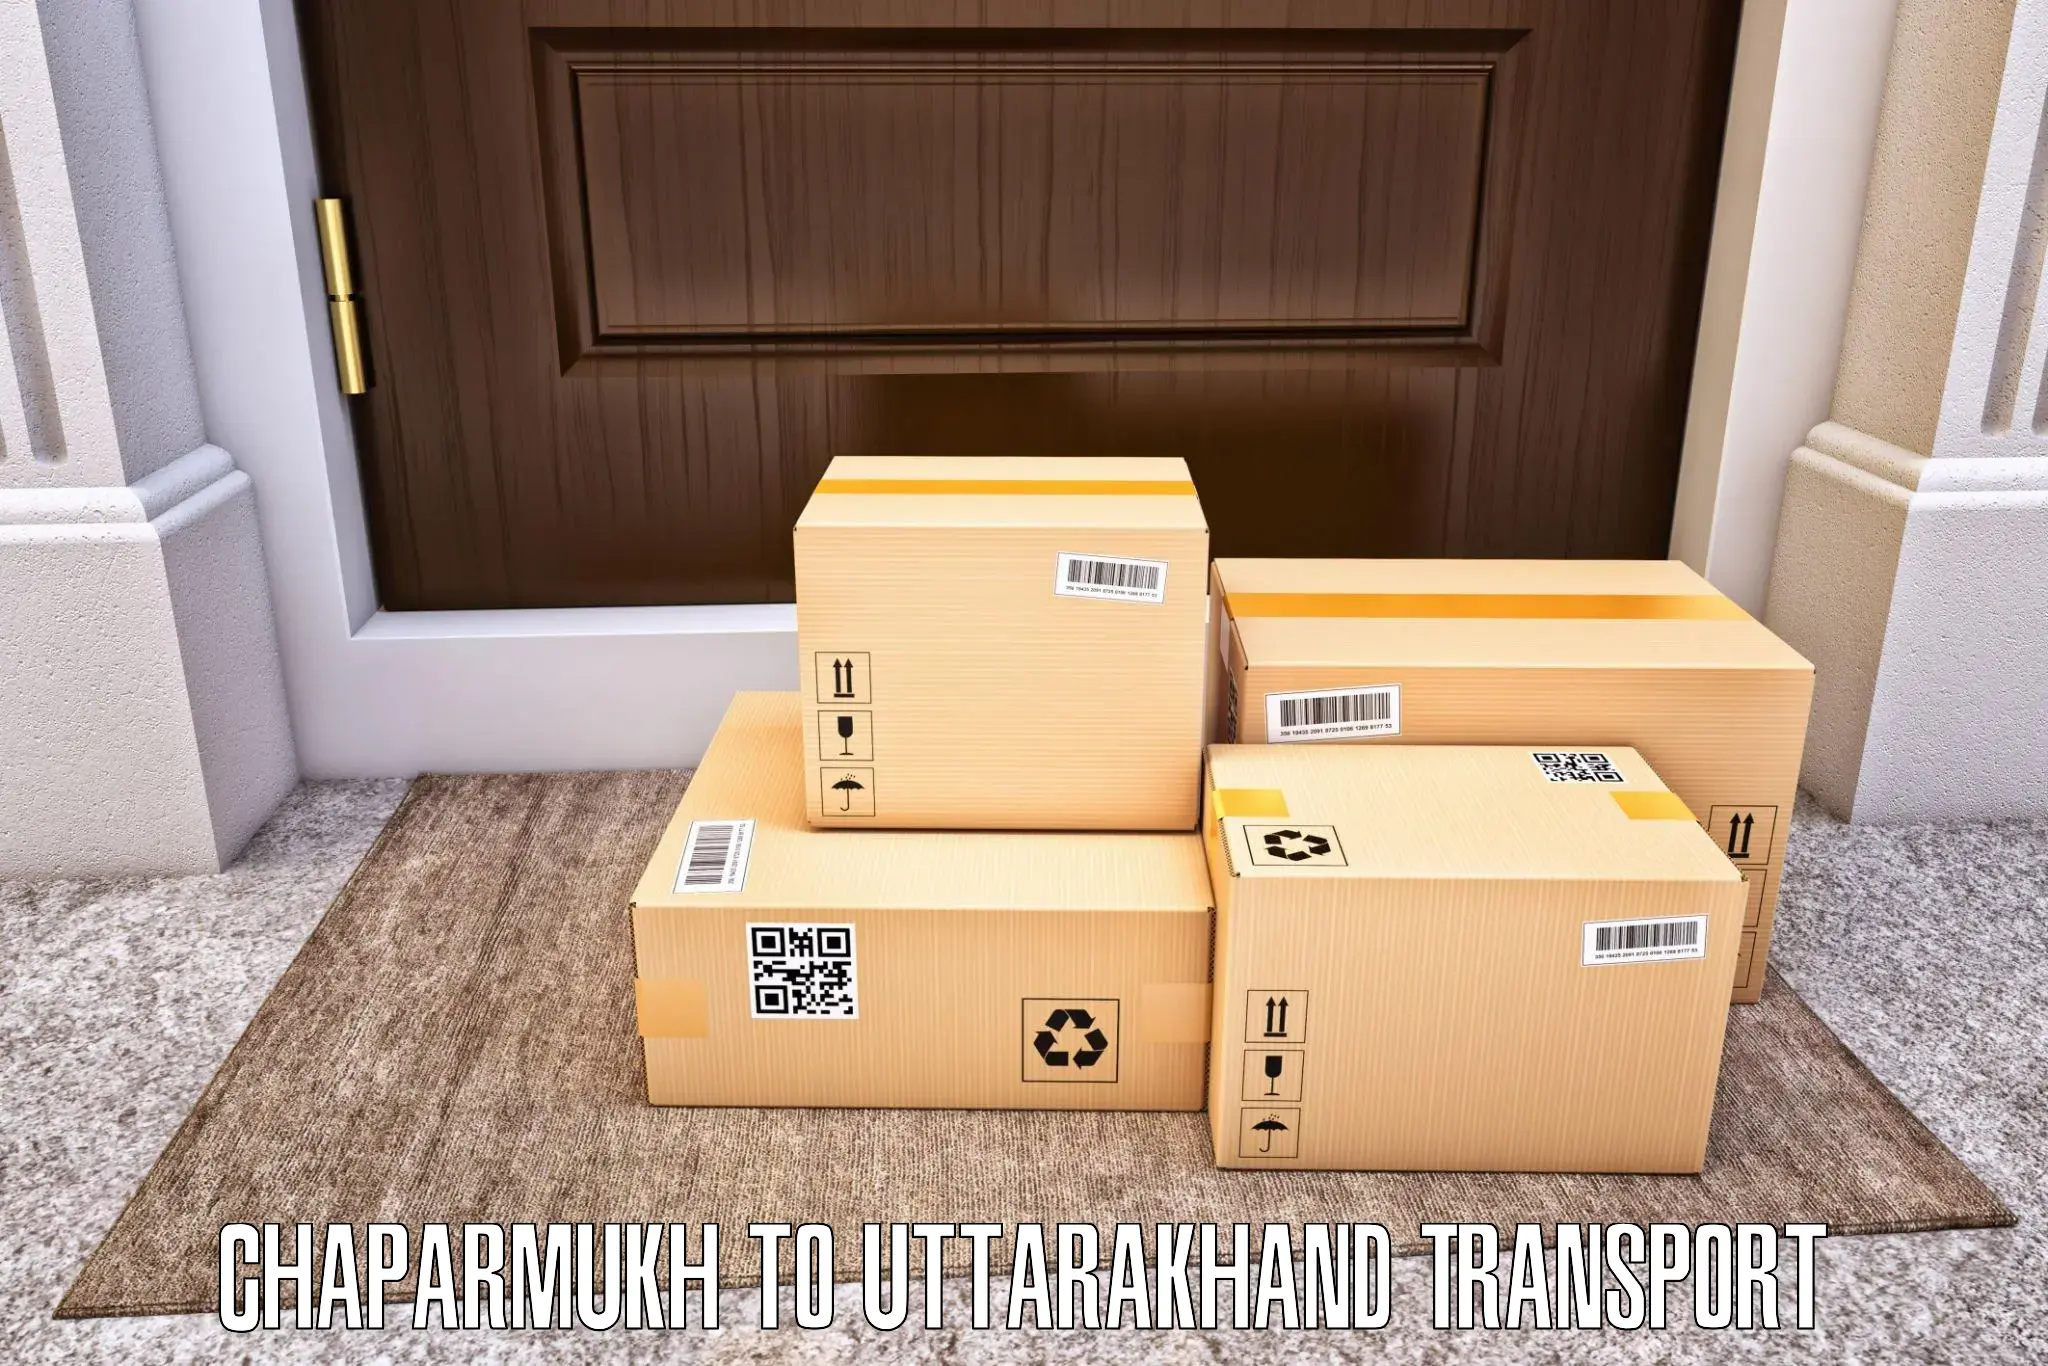 Online transport booking Chaparmukh to Udham Singh Nagar